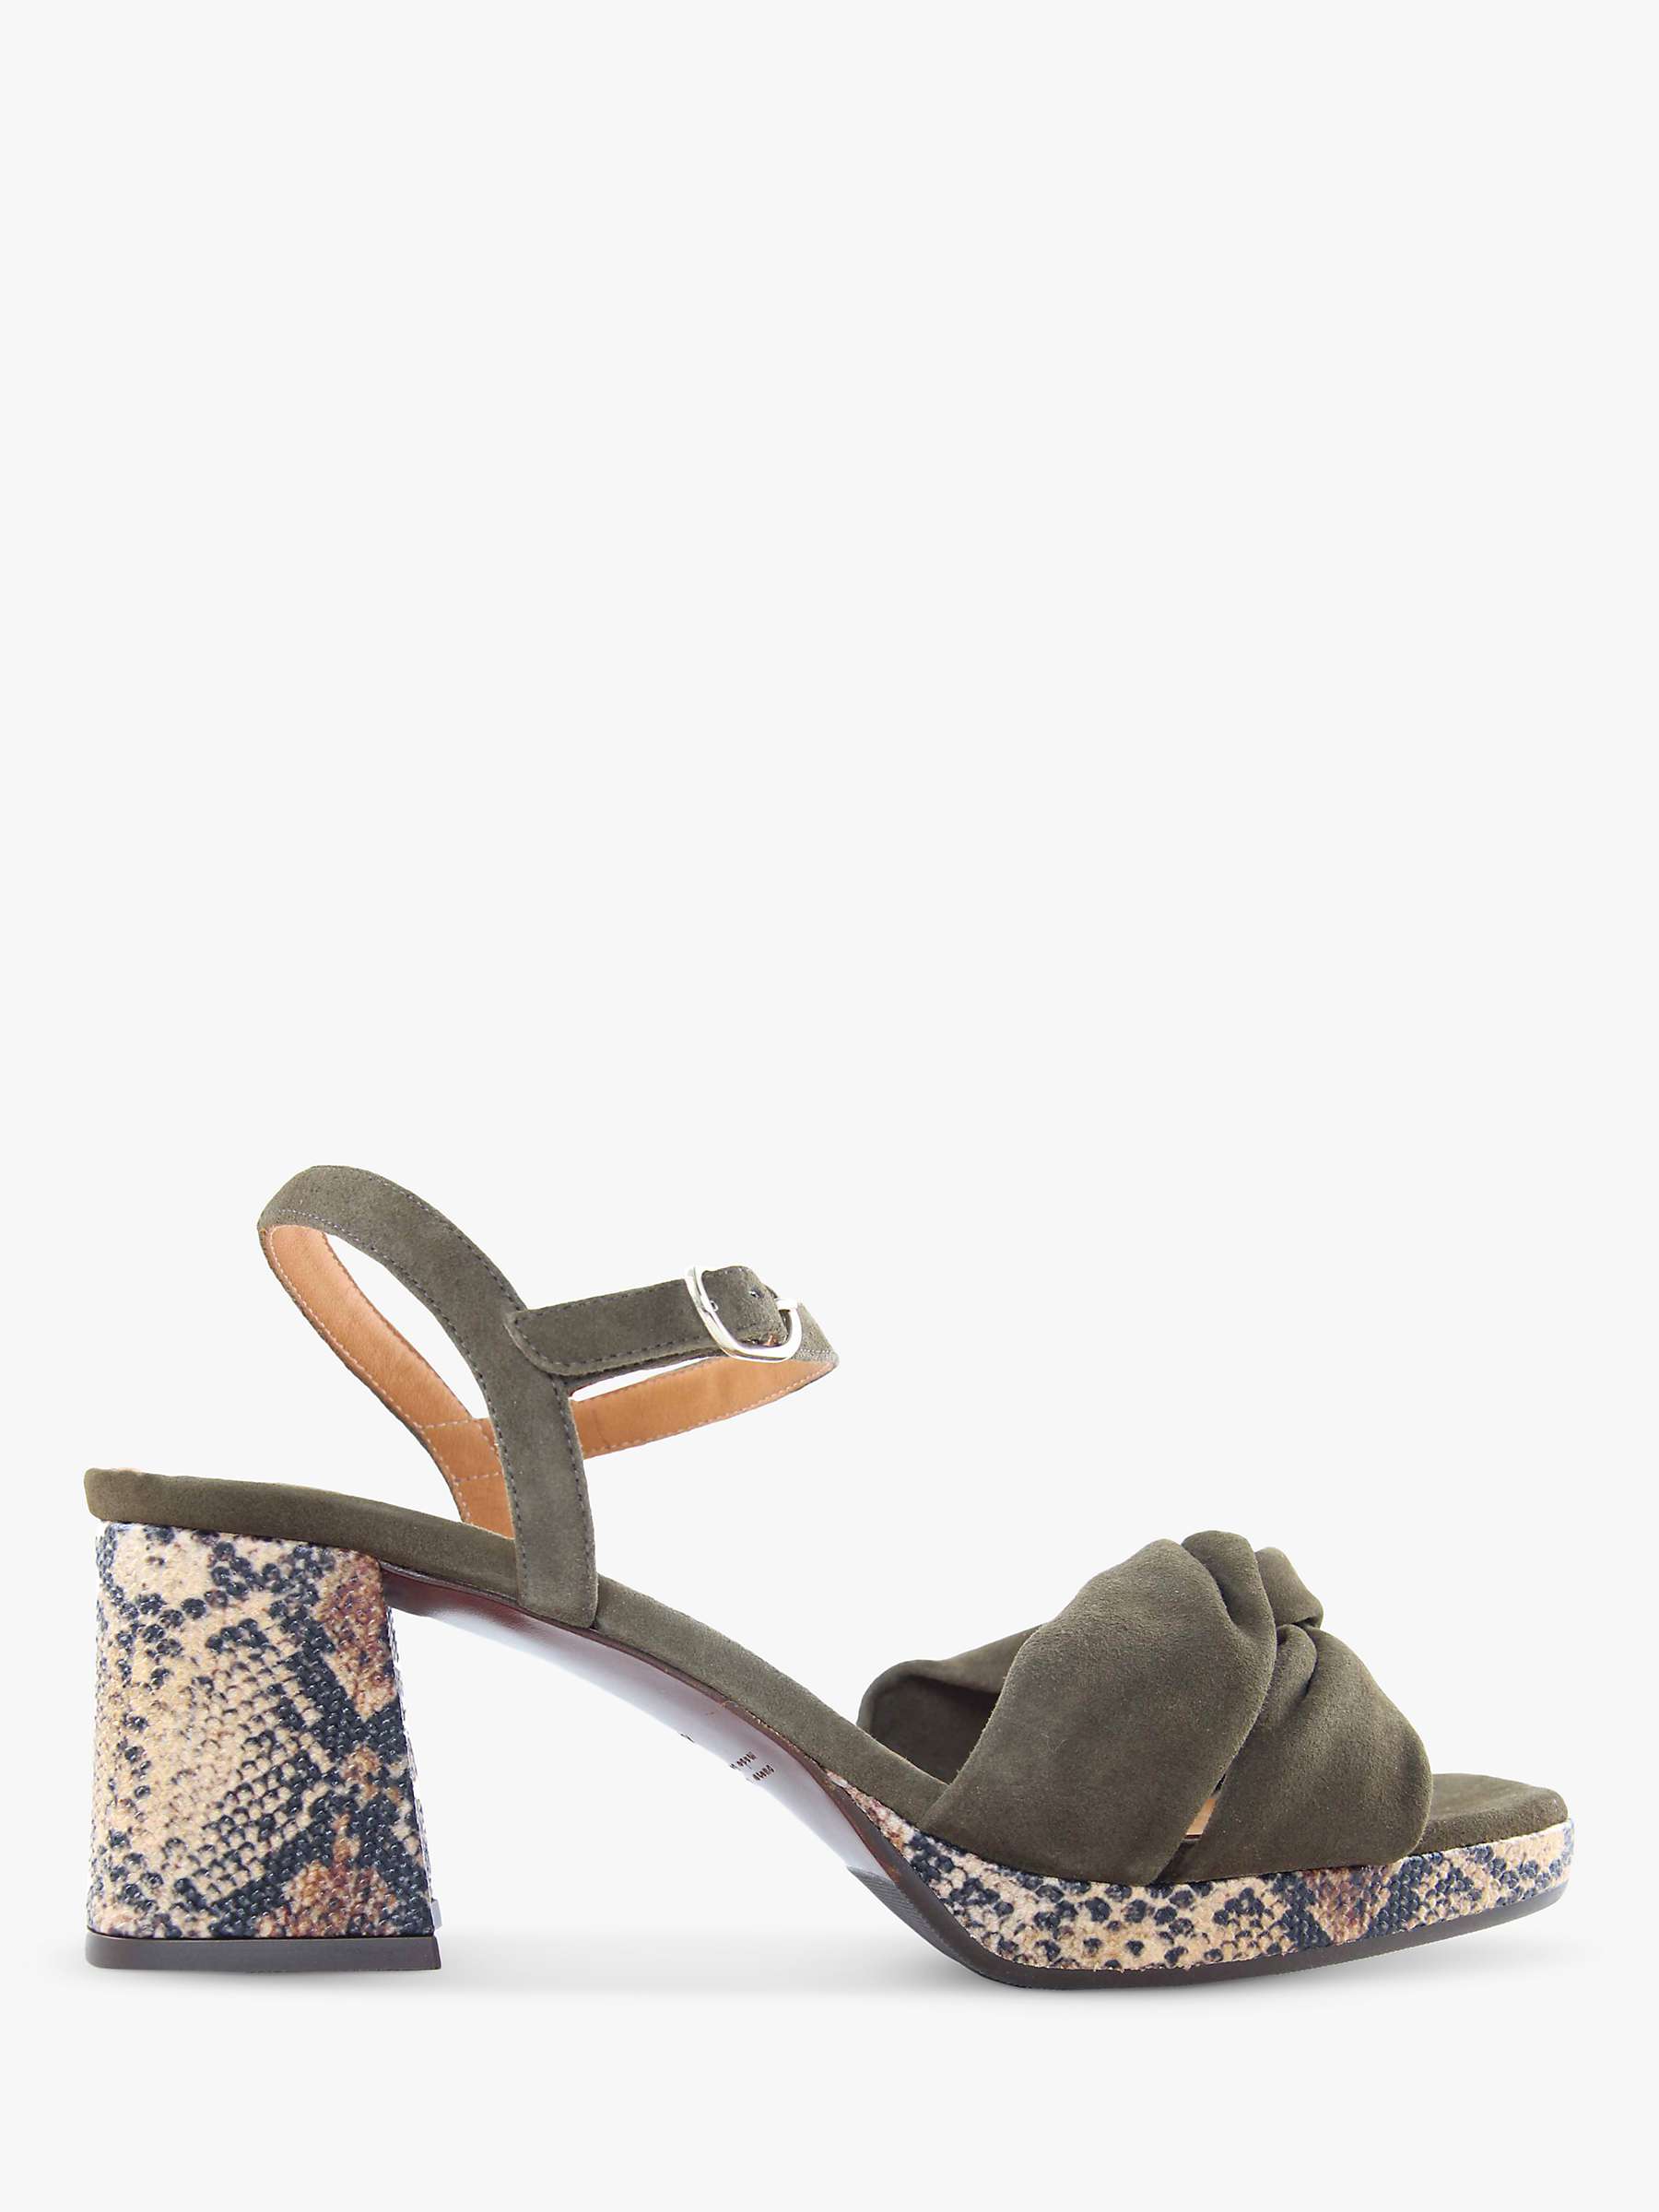 Buy Chie Mihara Gaura Platform Leather Sandals, Khaki/Snake Online at johnlewis.com